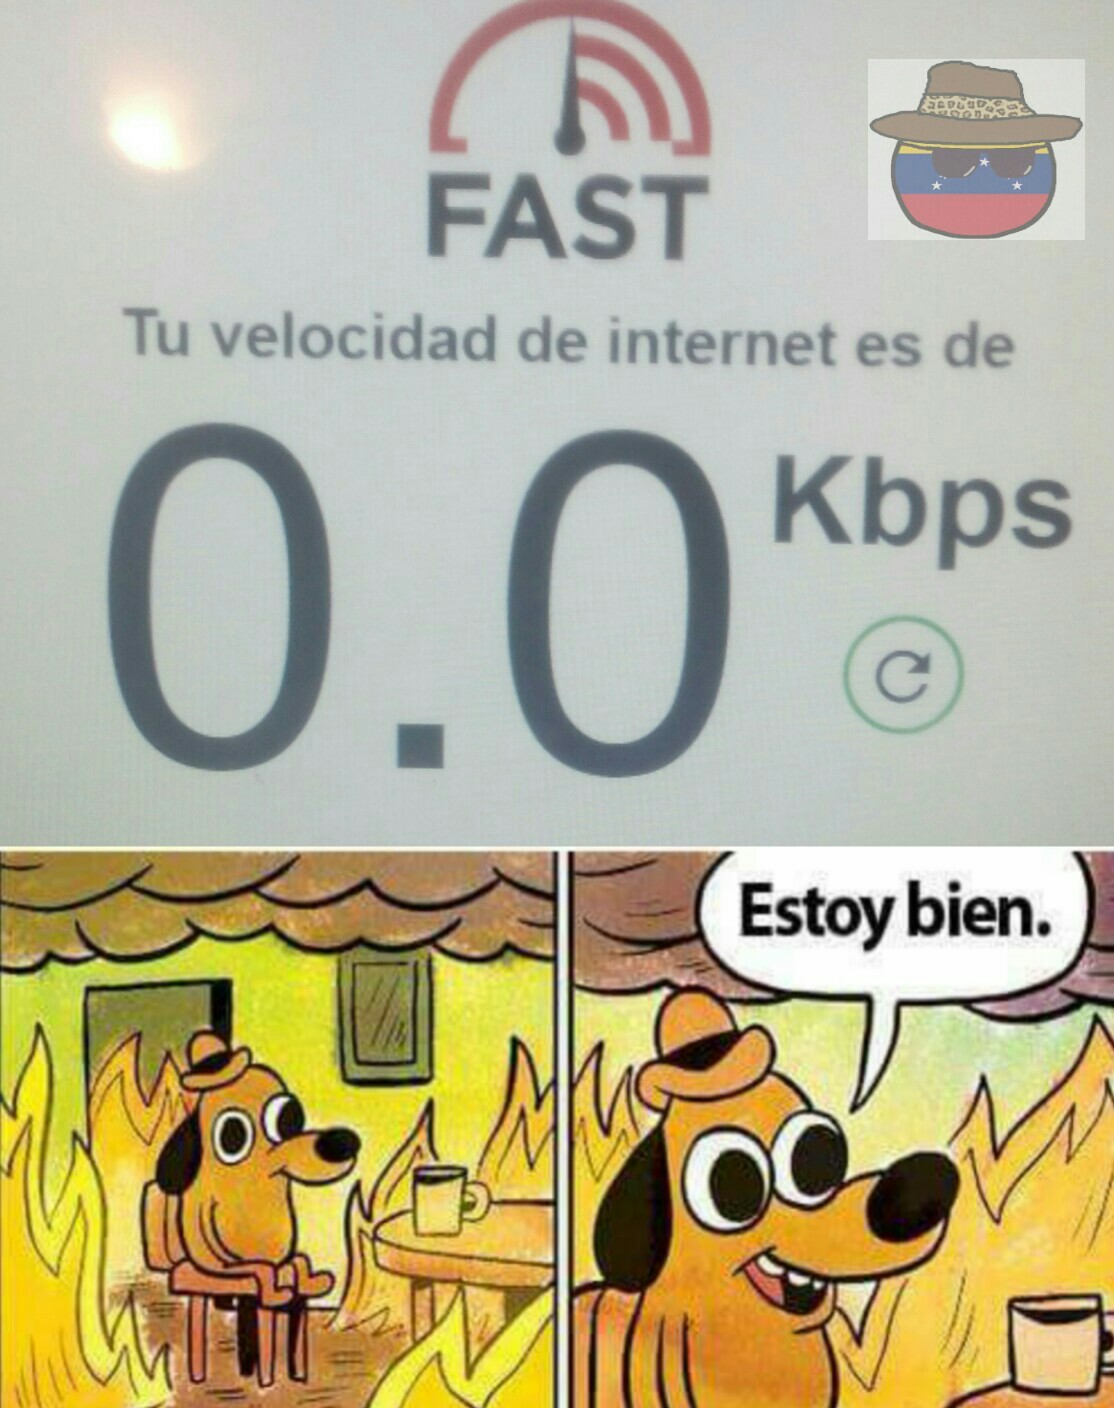 Maldito internet venezolano... - meme